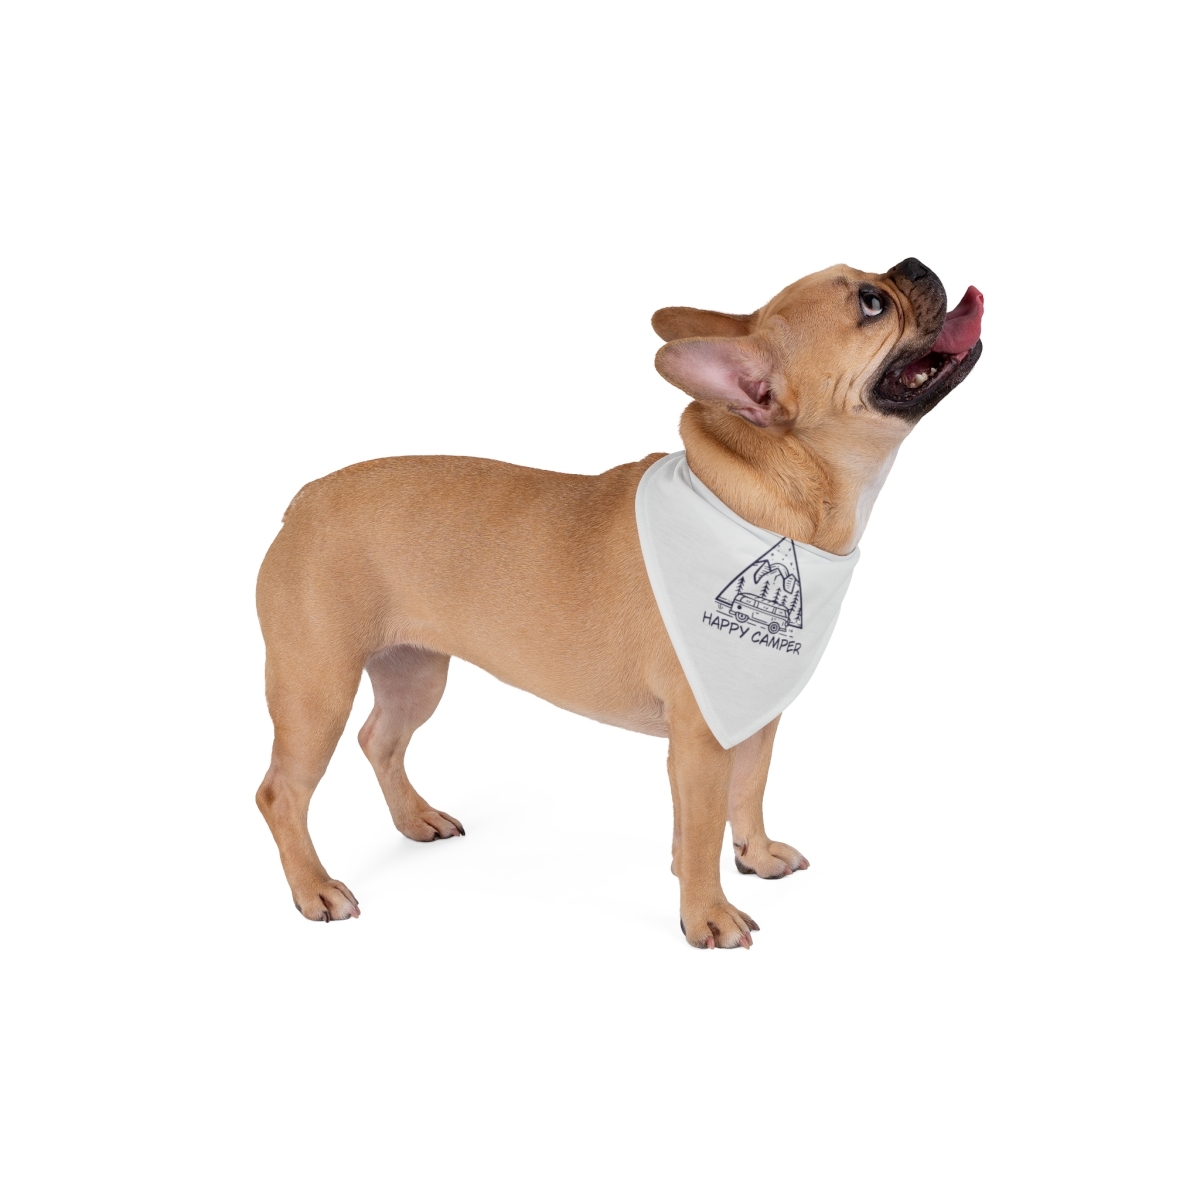 Primary image for Custom Dog Bandana: "Happy Camper" Design, Soft Polyester, 2 Sizes Available